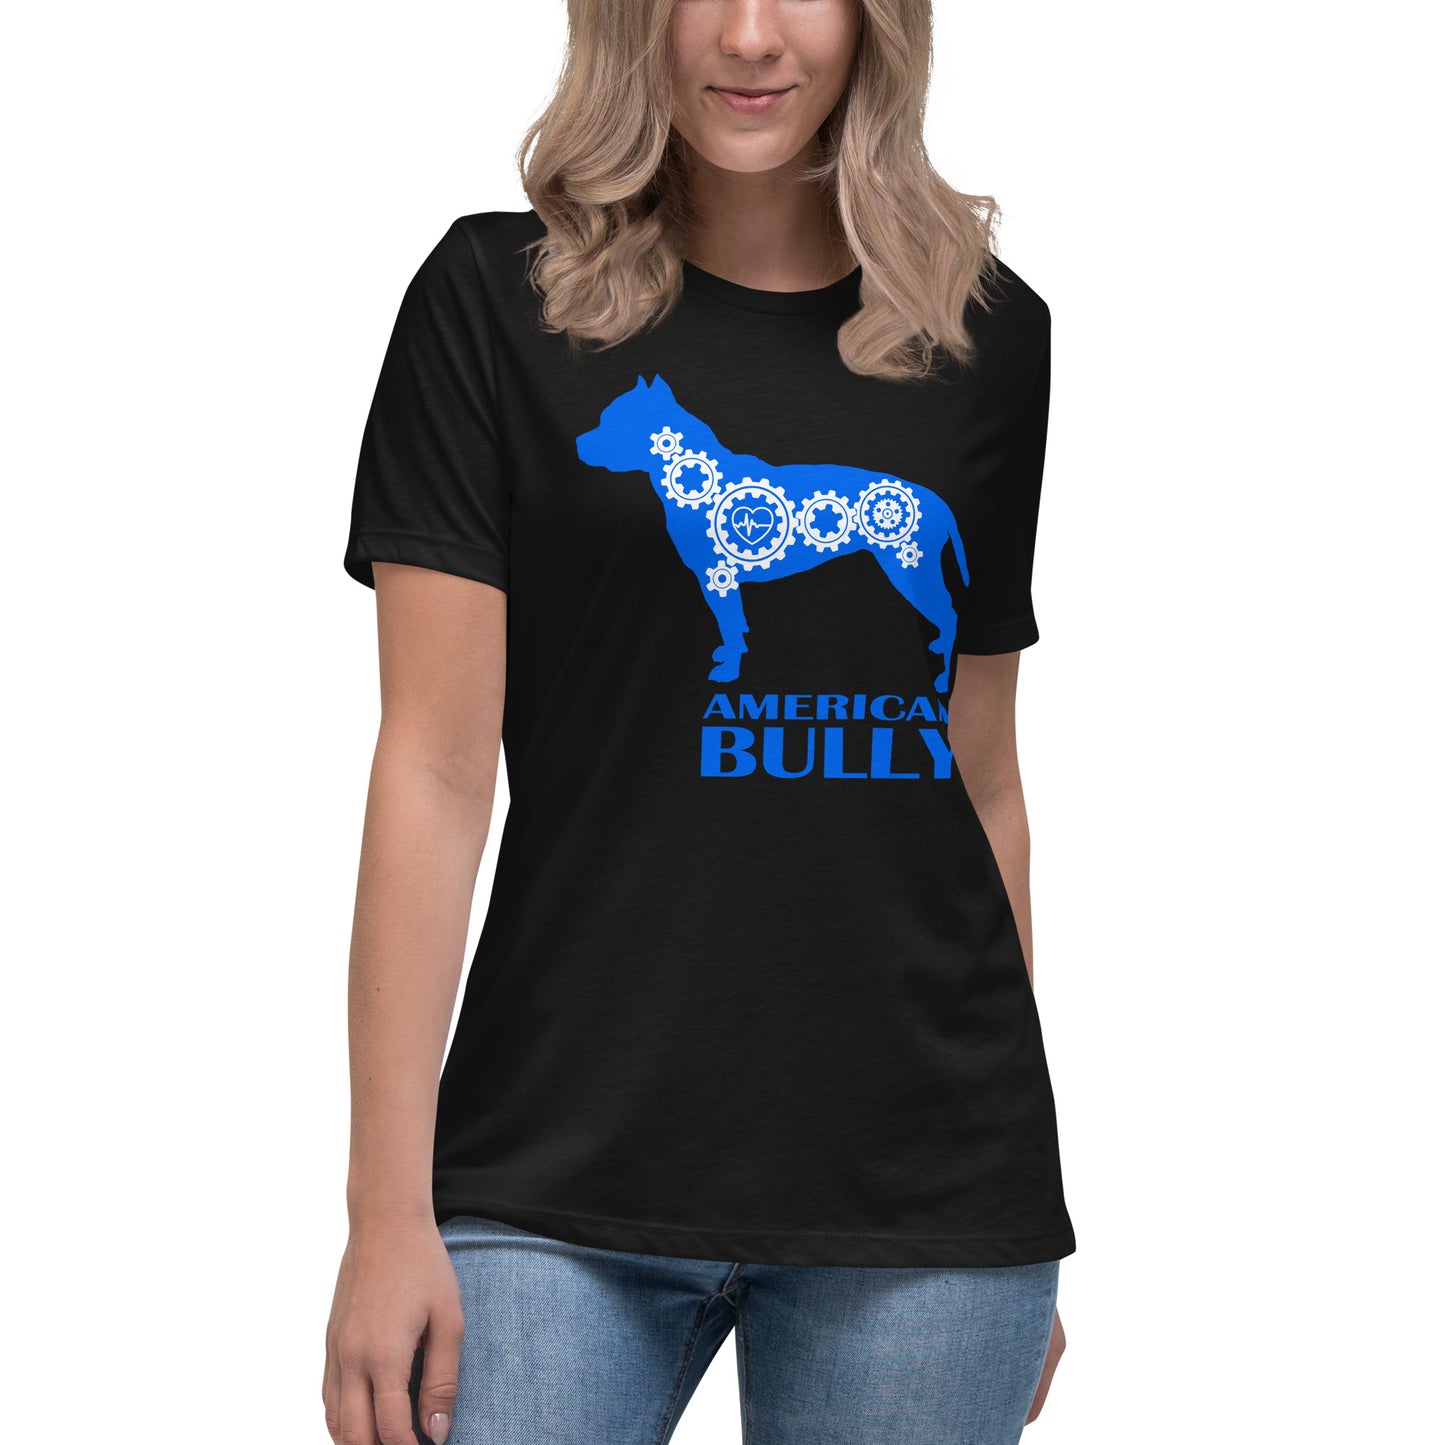 American Bully Bionic women’s black t-shirt by Dog Artistry.